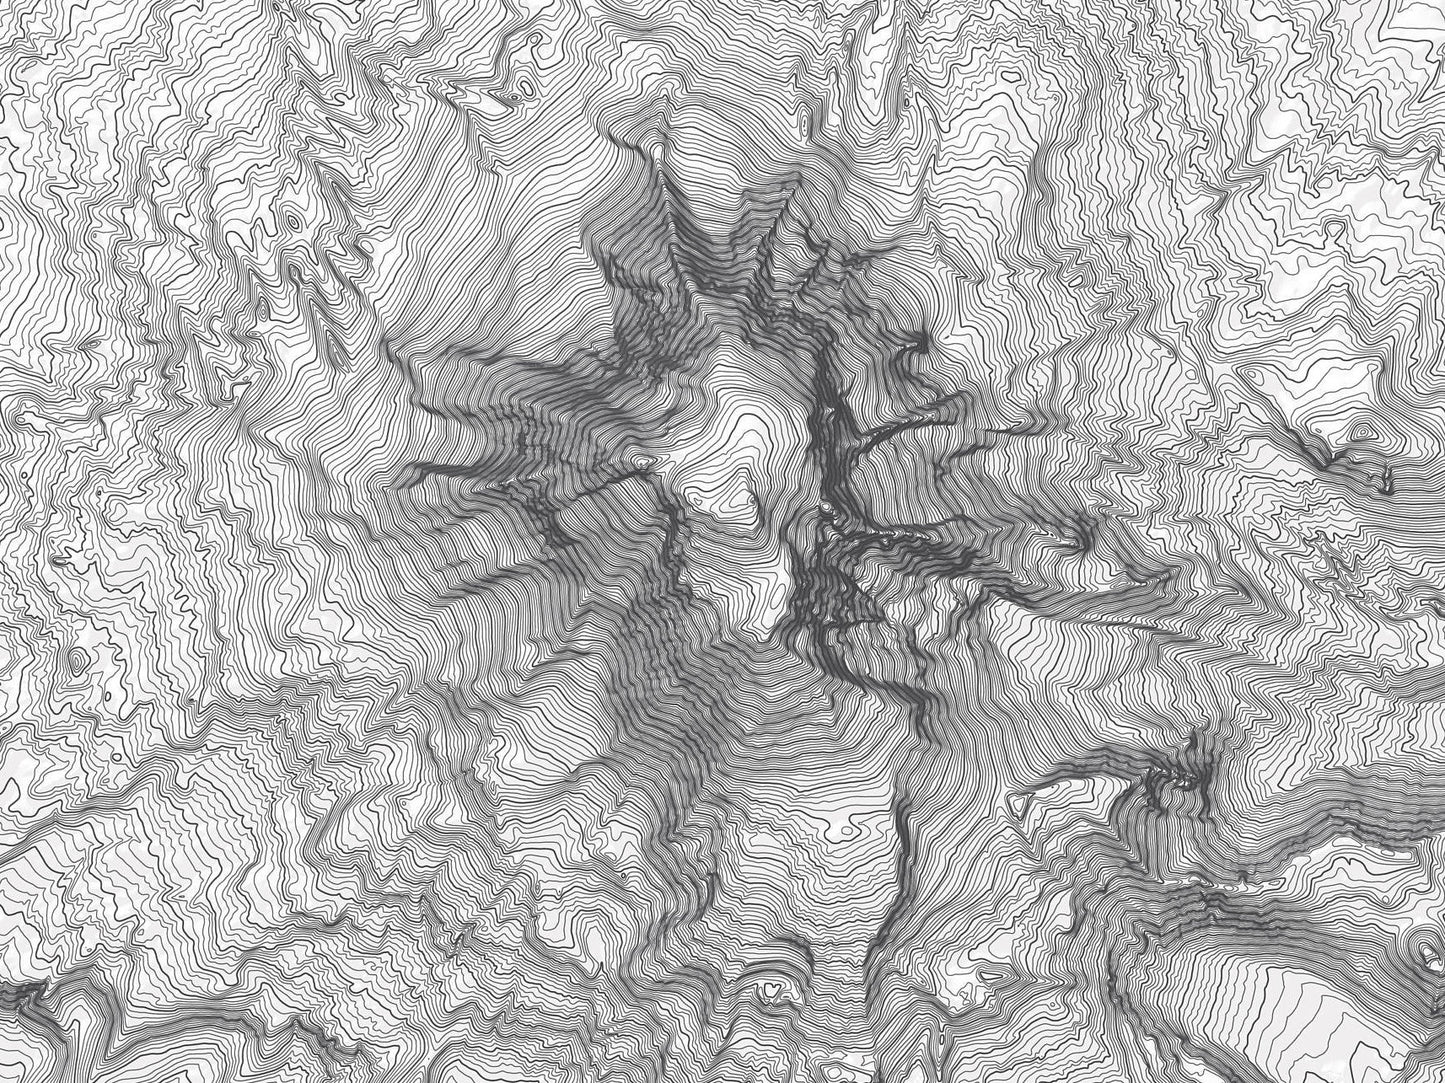 Mount Adams, Washington Topography Elevation Print Wall Art